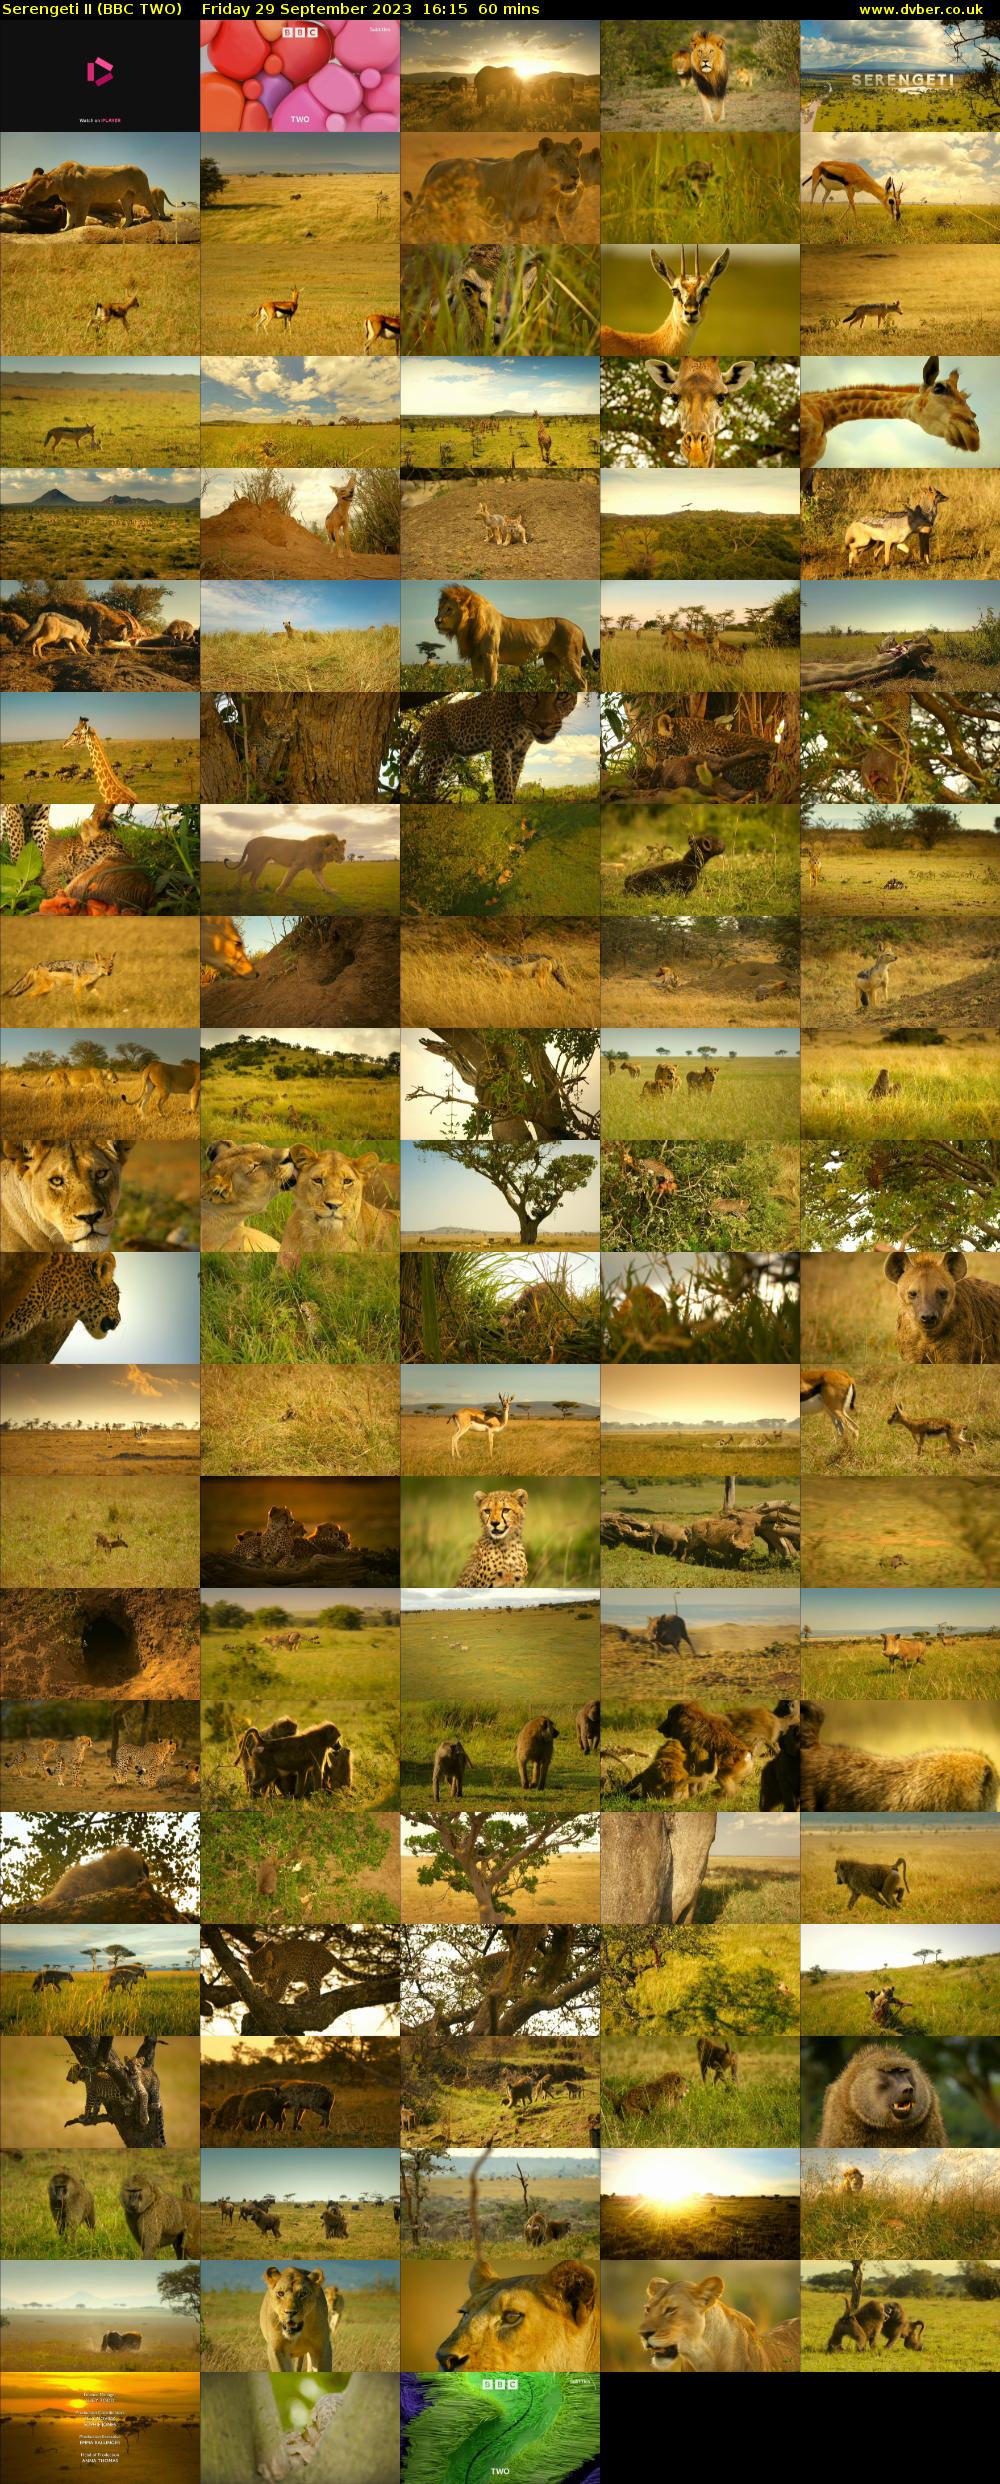 Serengeti II (BBC TWO) Friday 29 September 2023 16:15 - 17:15